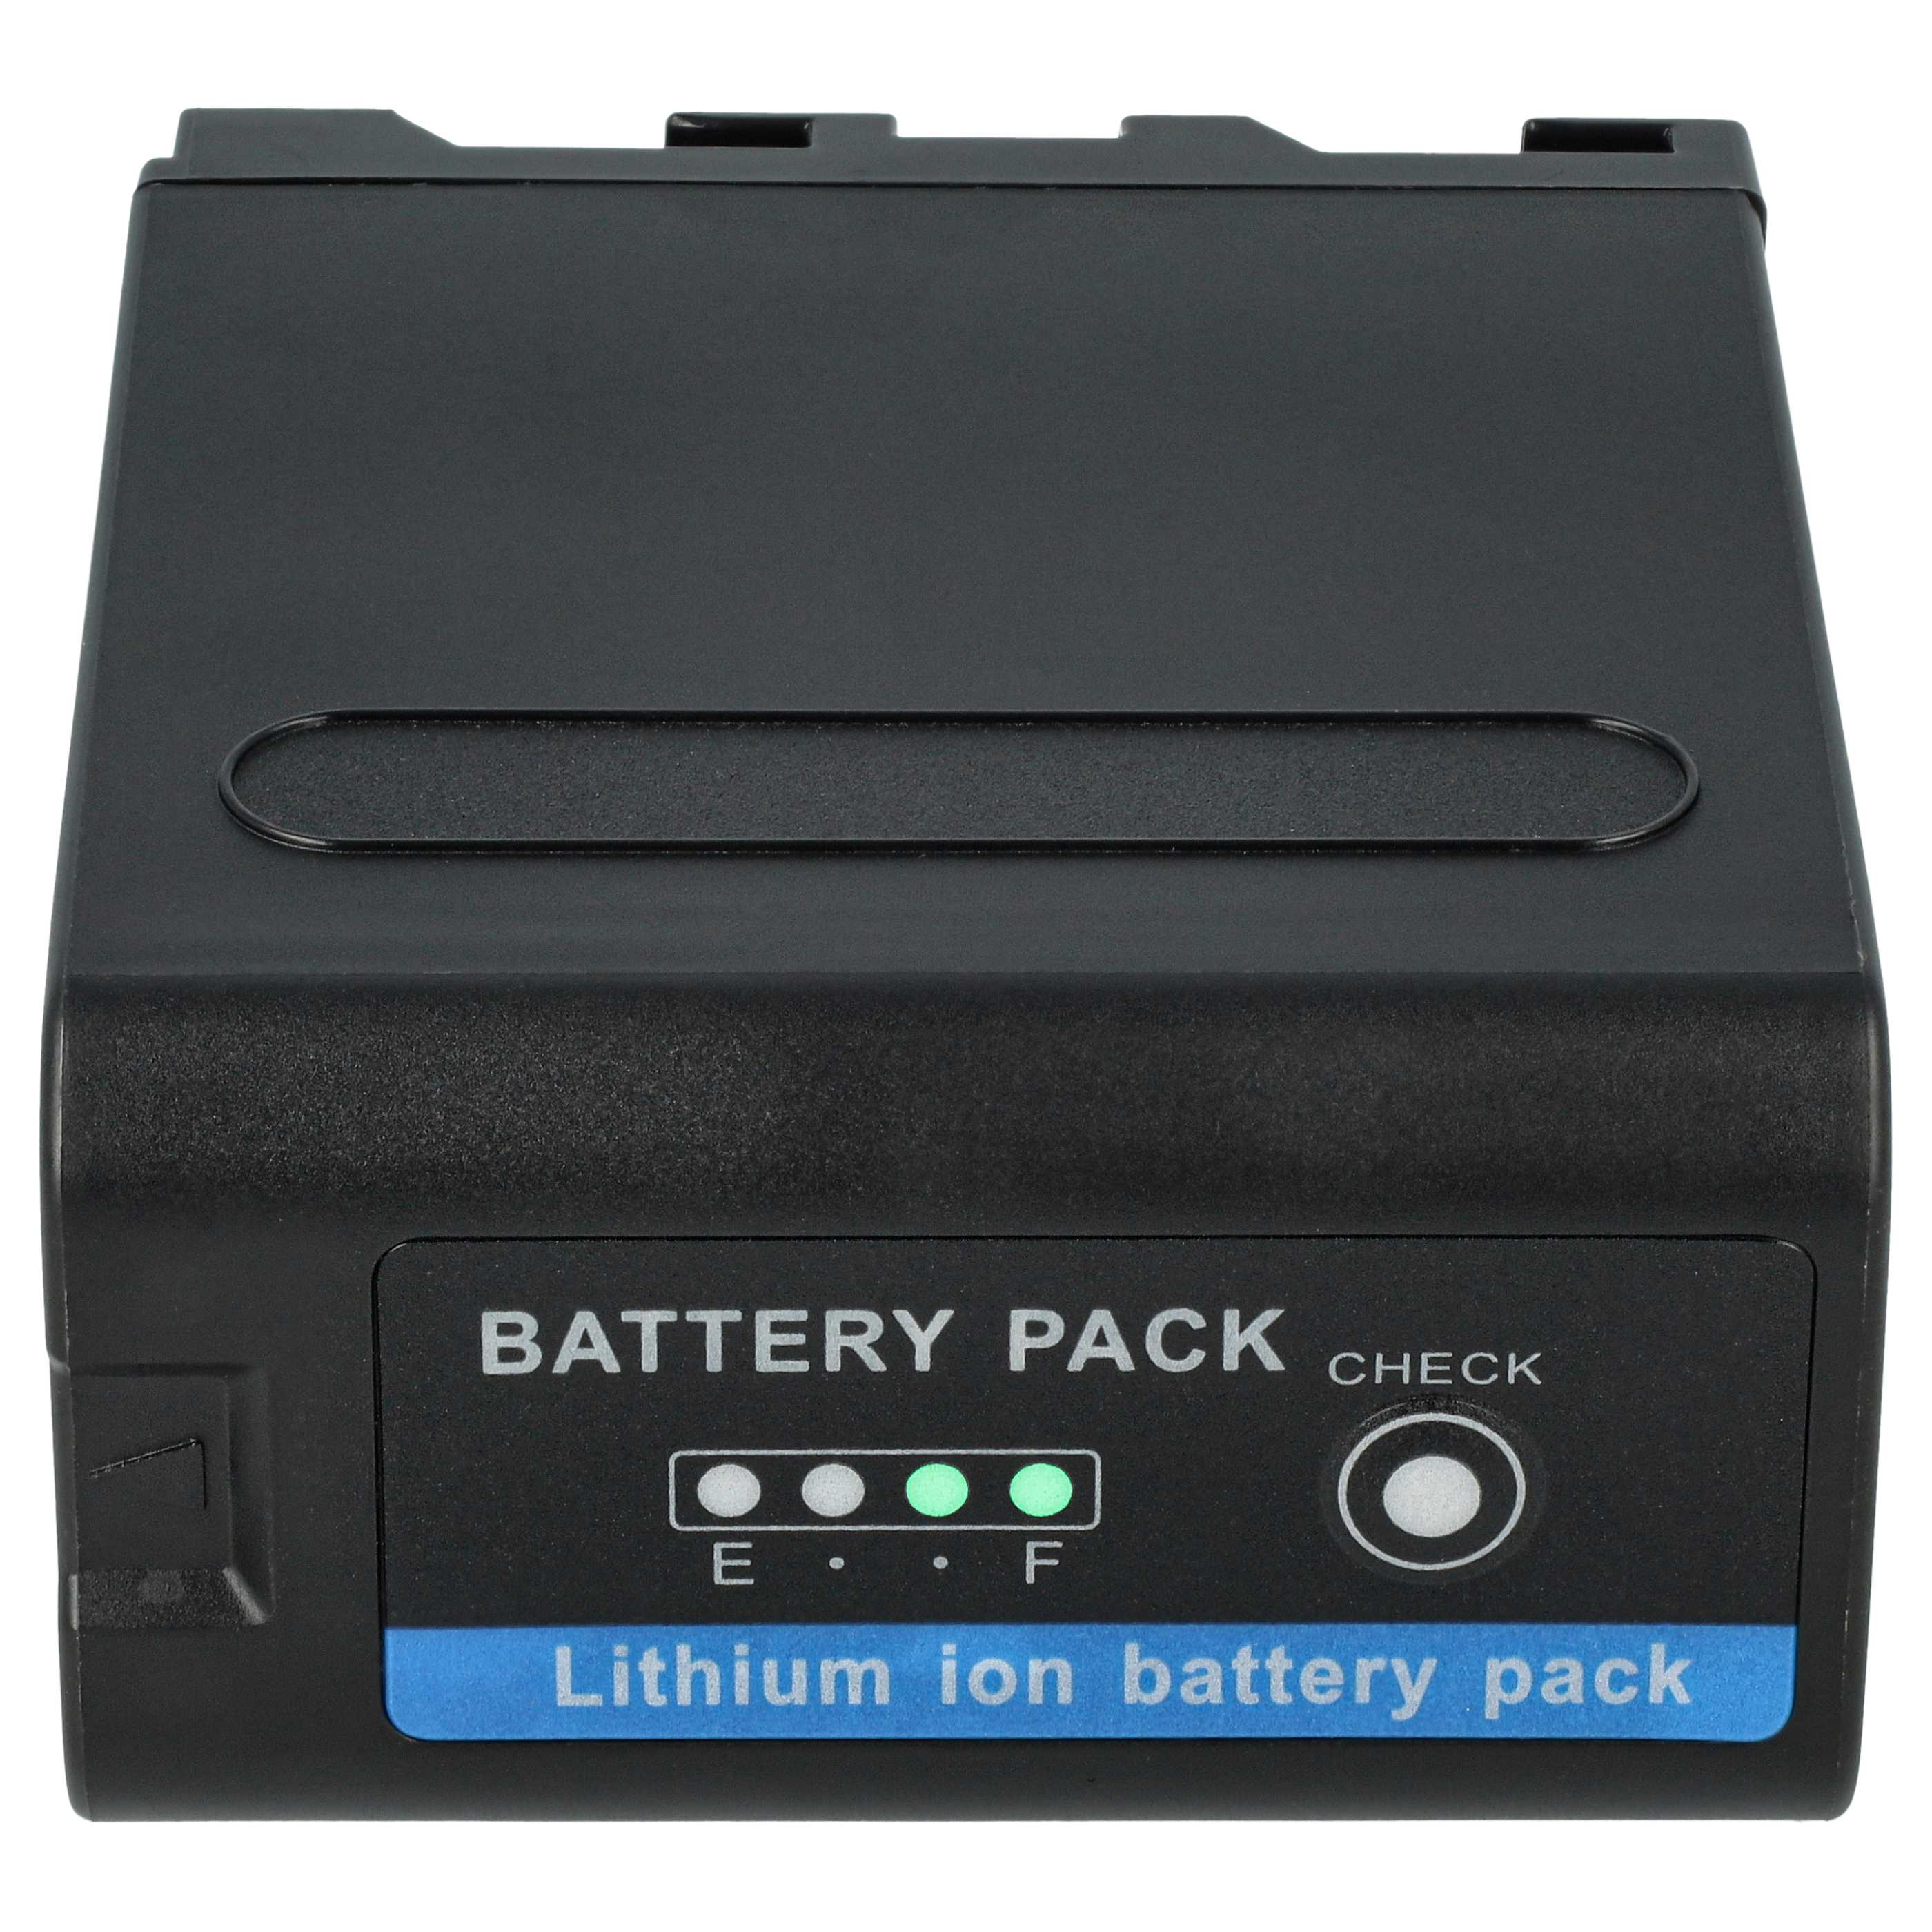 Batterie remplace Sony NP-F930, NP-F990, NP-F970, NP-F960, NP-F950 pour caméscope - 10400mAh 7,4V Li-ion